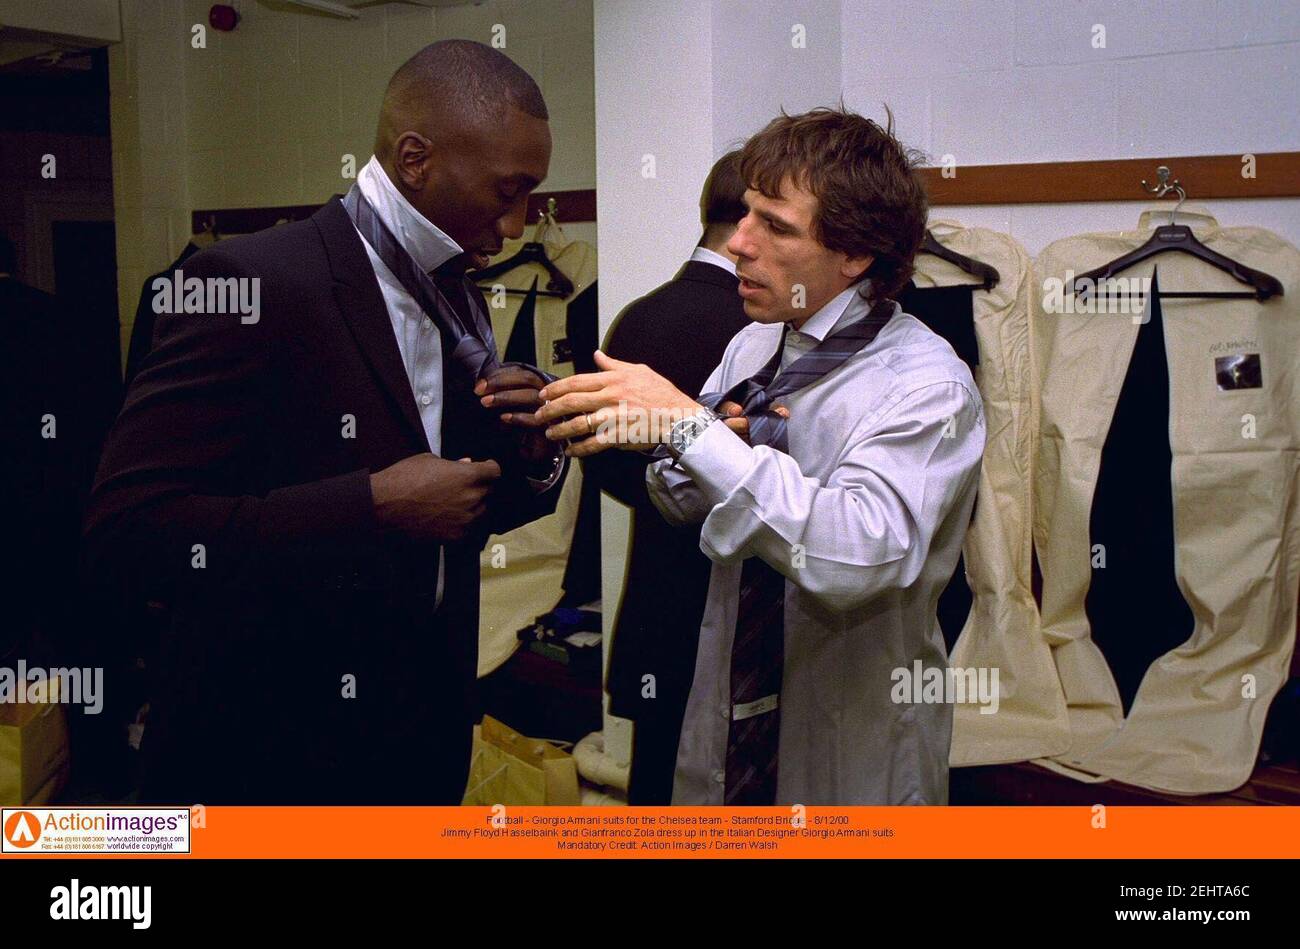 tiger gang salary Football - Giorgio Armani suits for the Chelsea team - Stamford Bridge -  8/12/00 Jimmy Floyd Hasselbaink